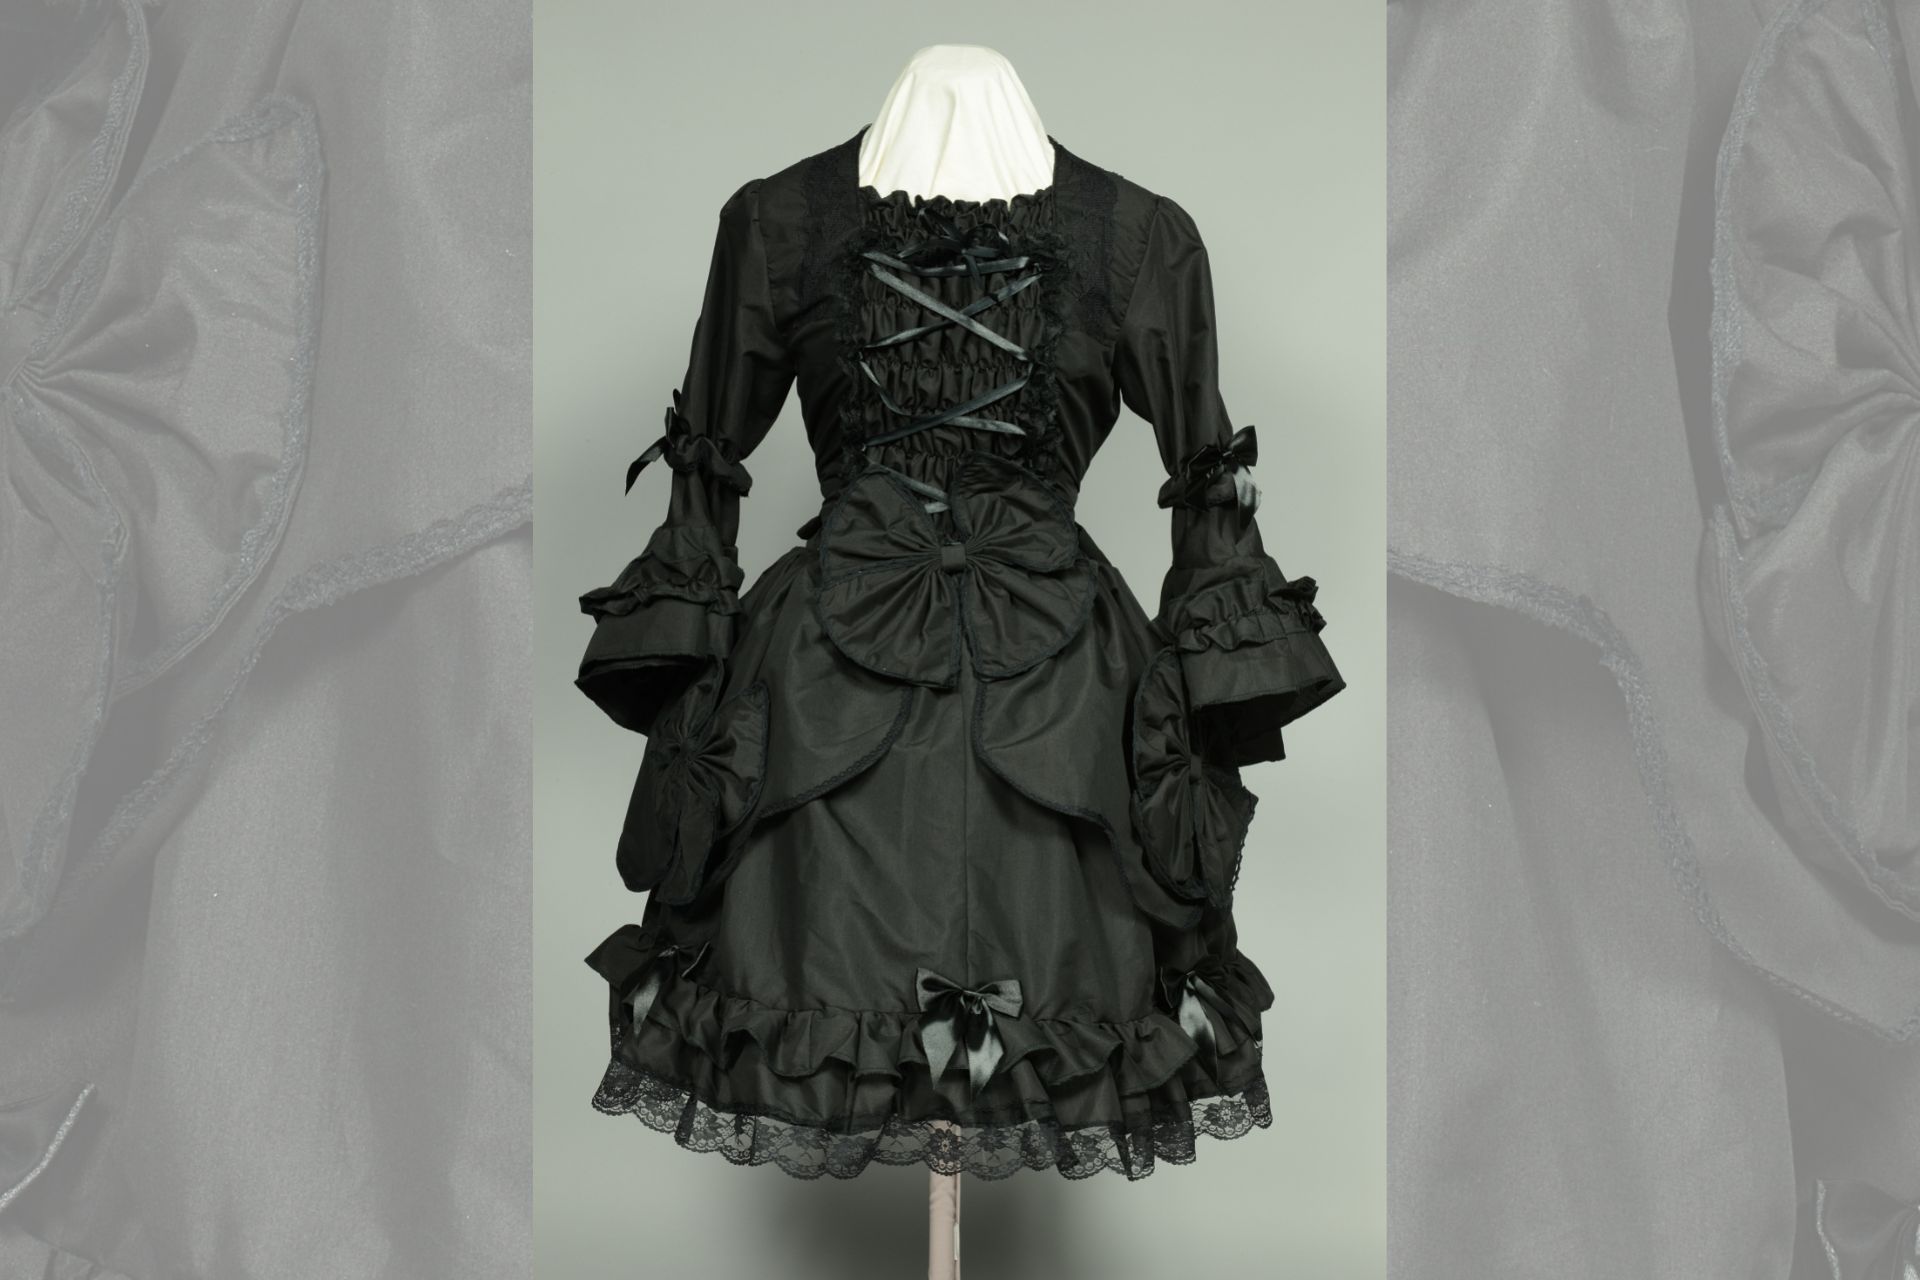 Gothic Lolita dress